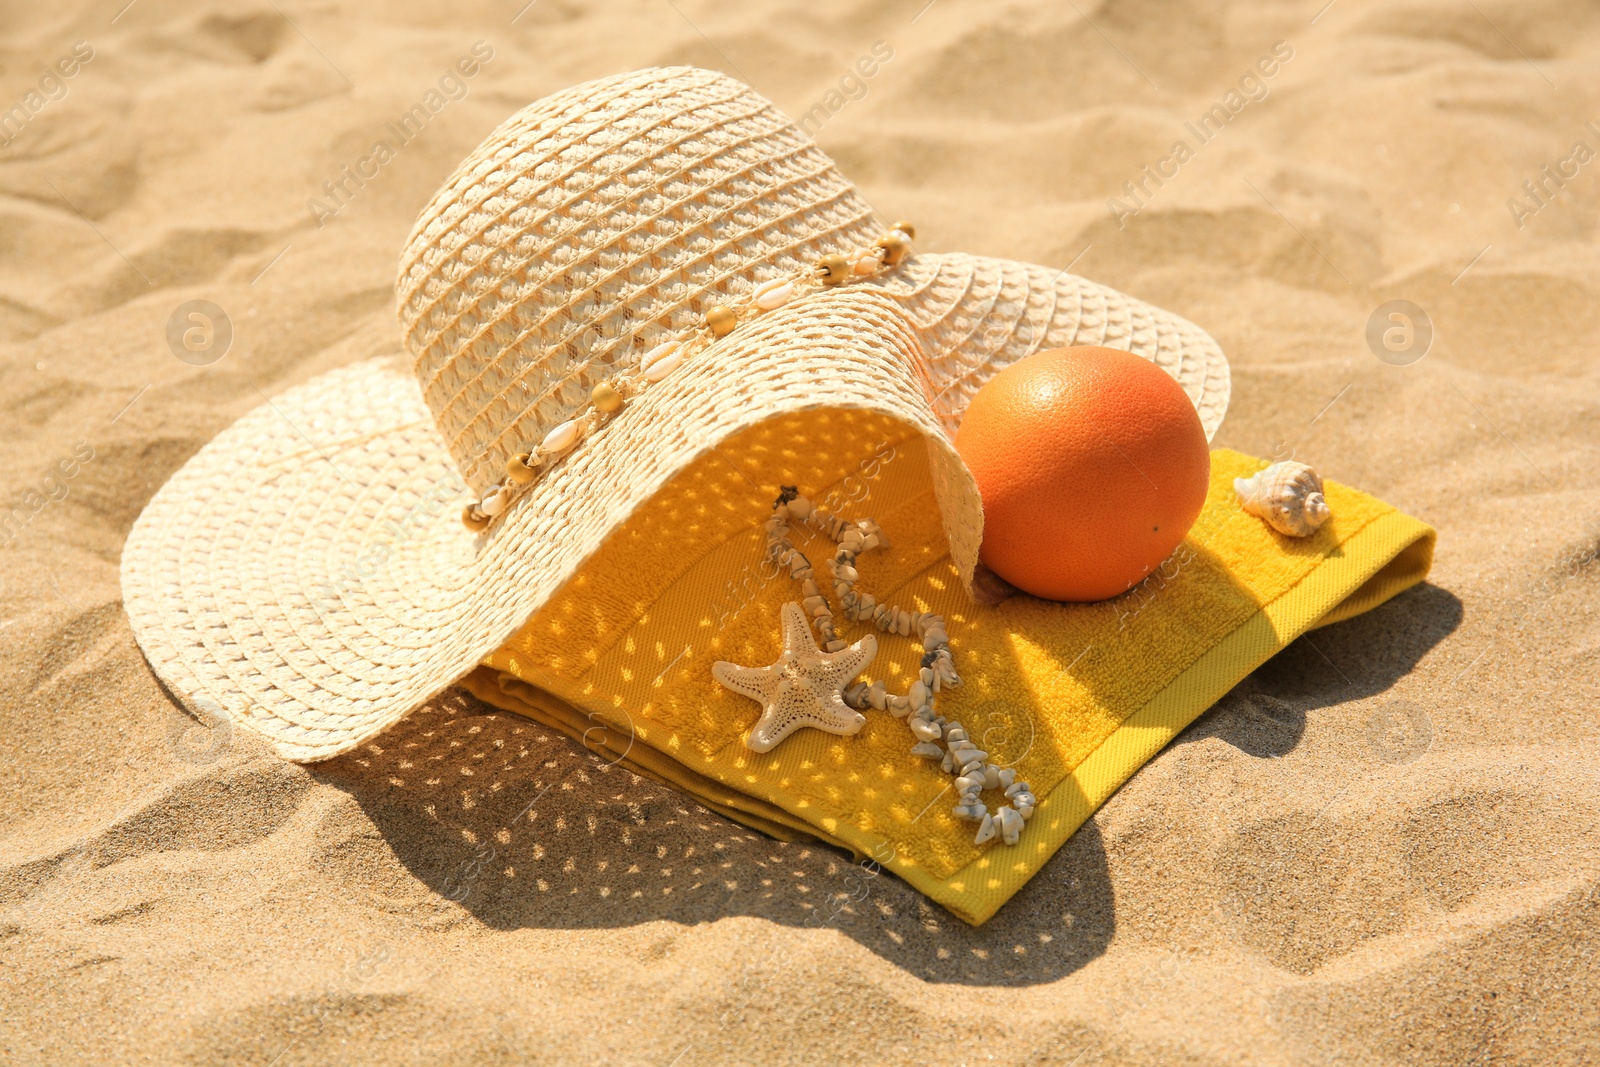 Photo of Straw hat, towel and orange on sand